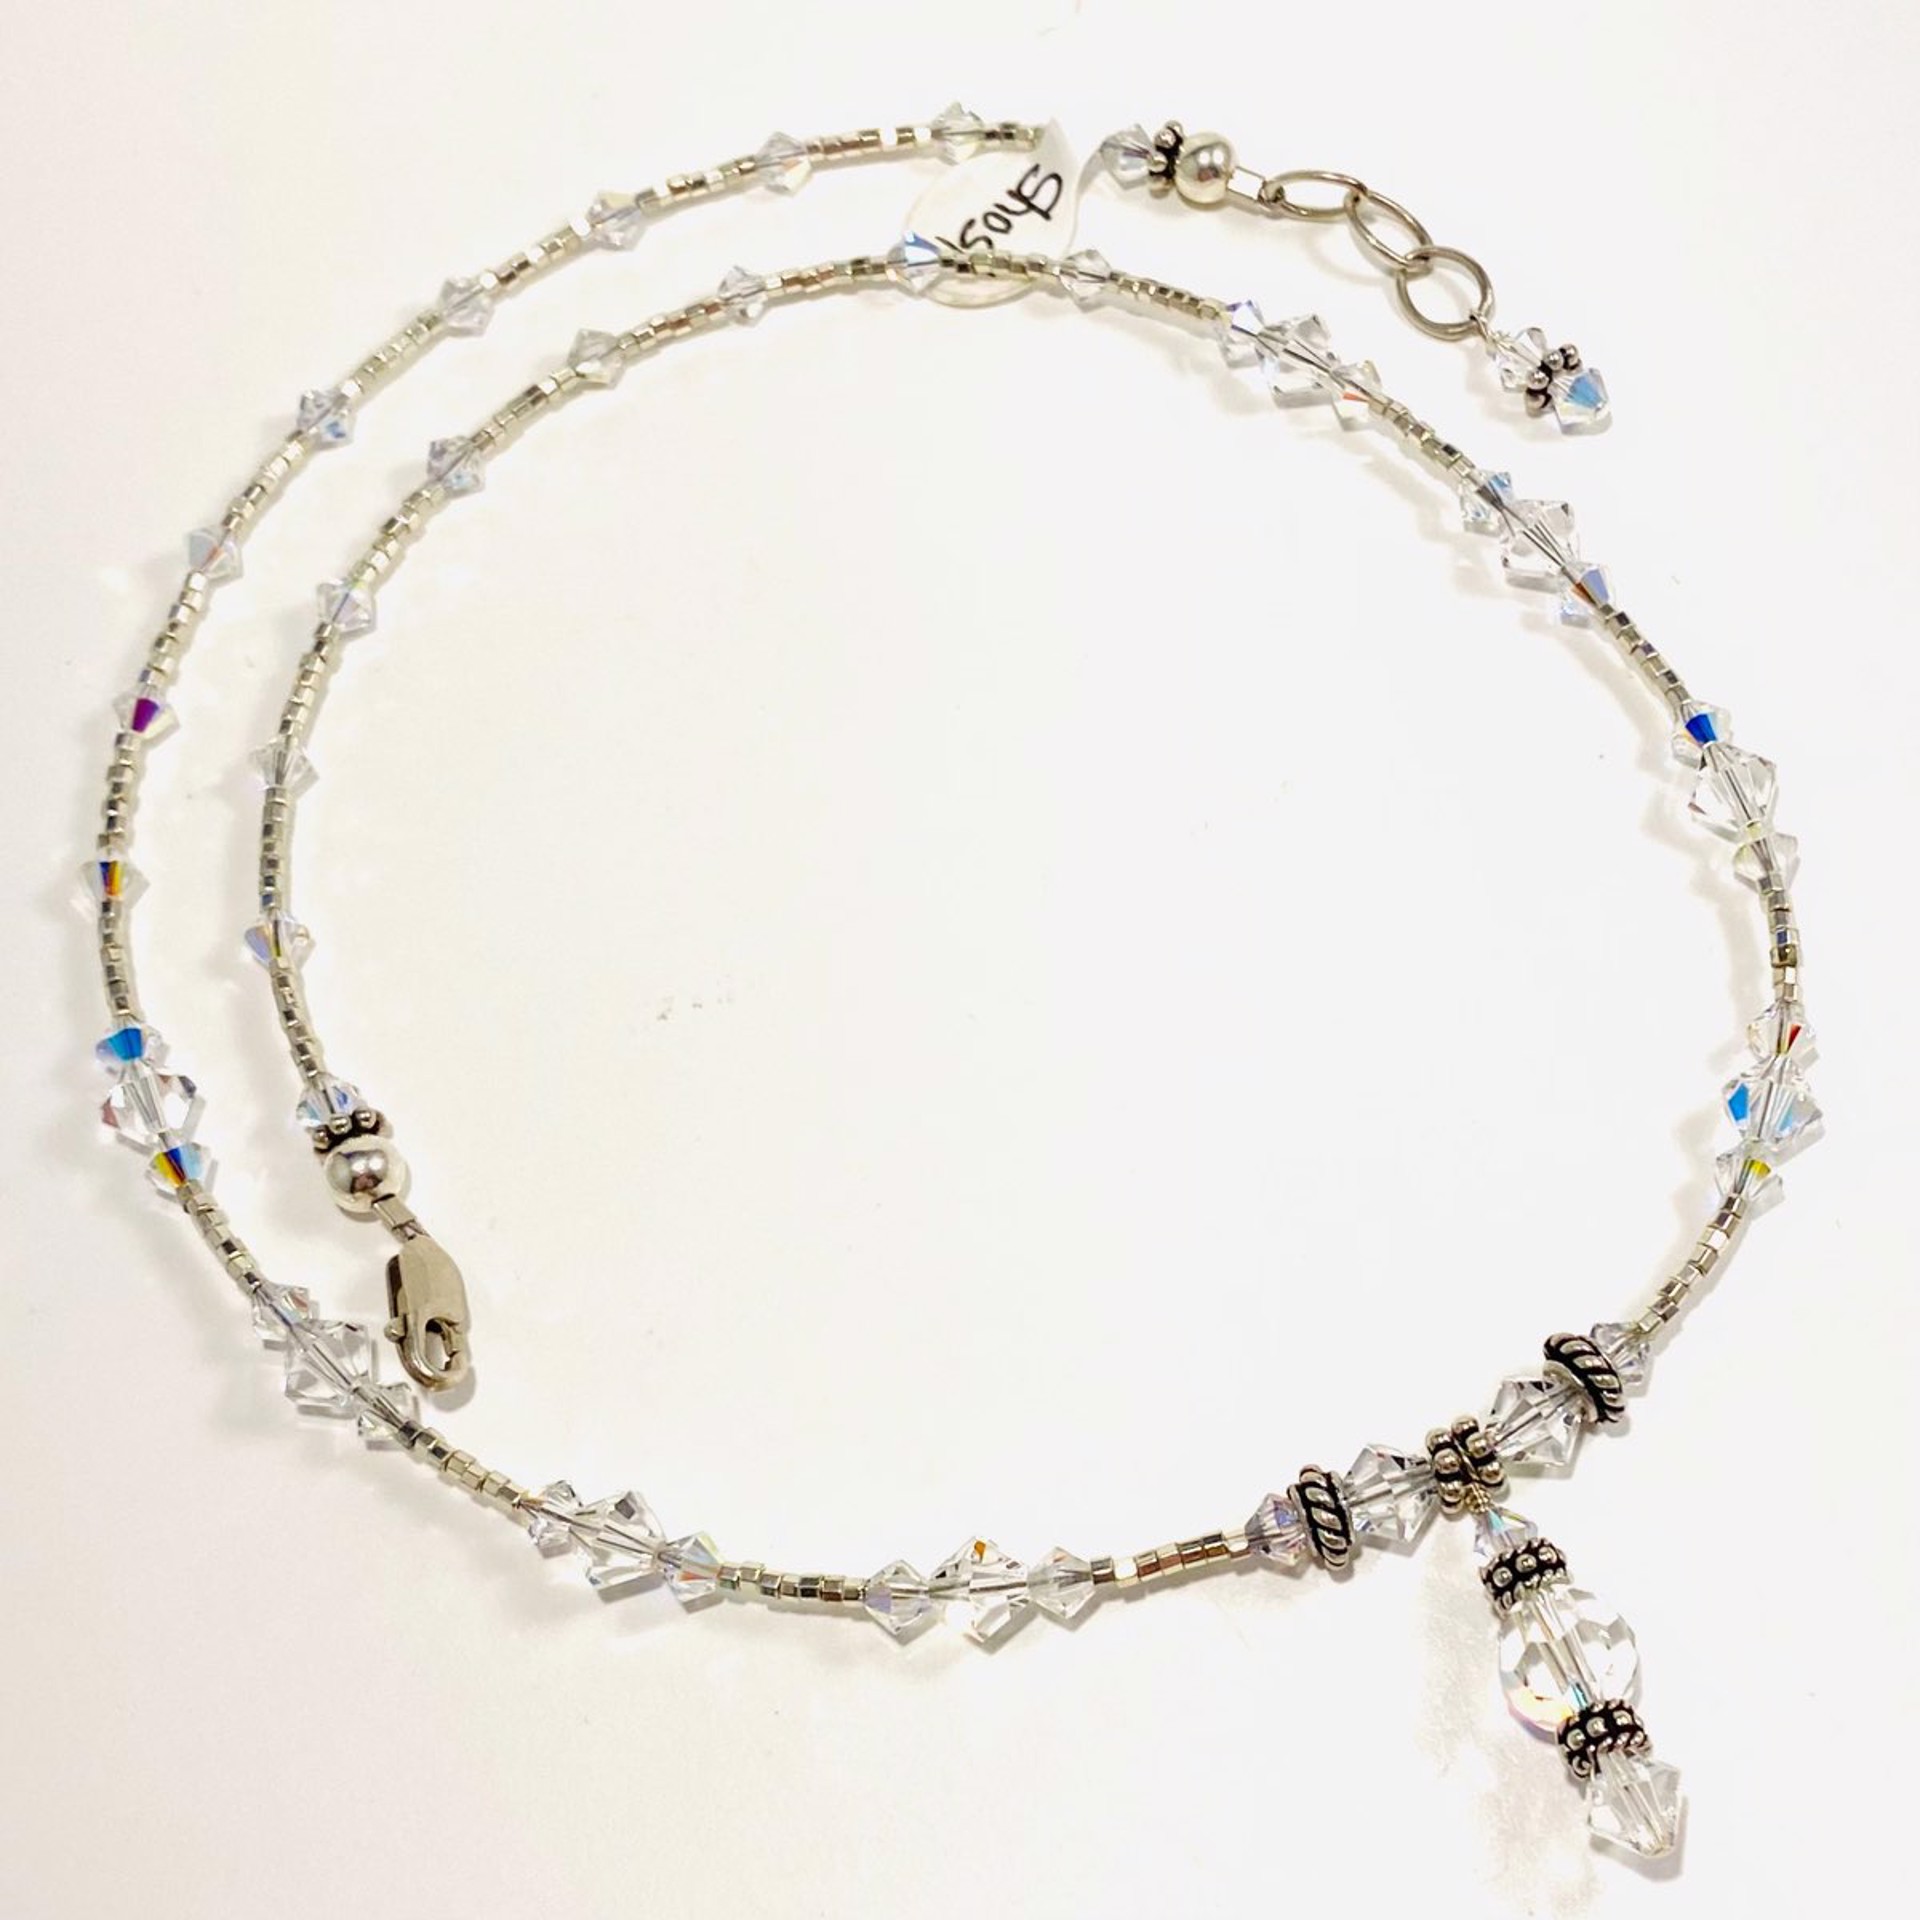 SHOSH22-13 Birthstone Necklace~April "Diamond " Swarovski Crystals by Shoshannah Weinisch